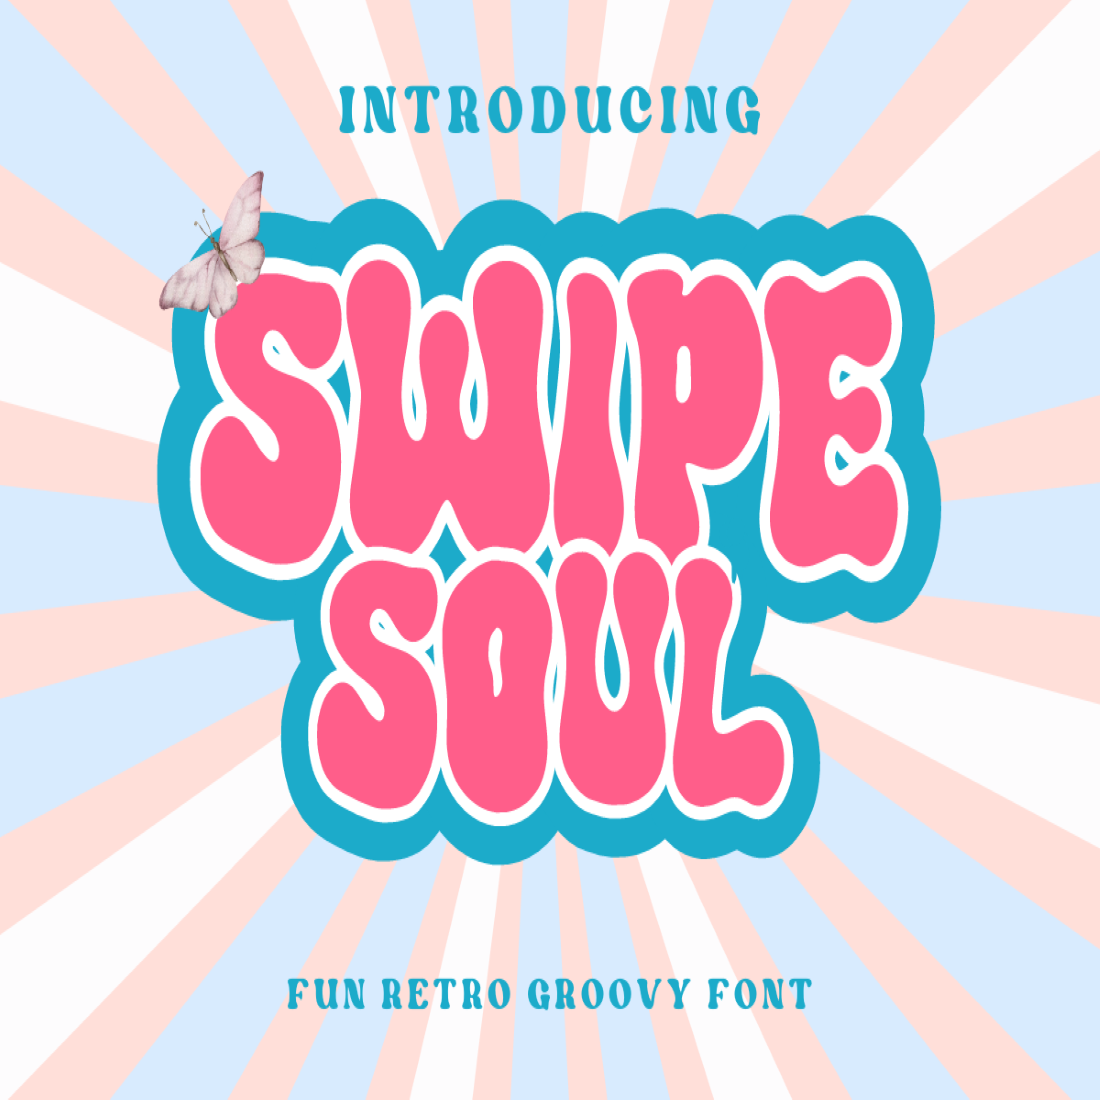 Swipe Soul - Fun Retro Groovy Font cover image.